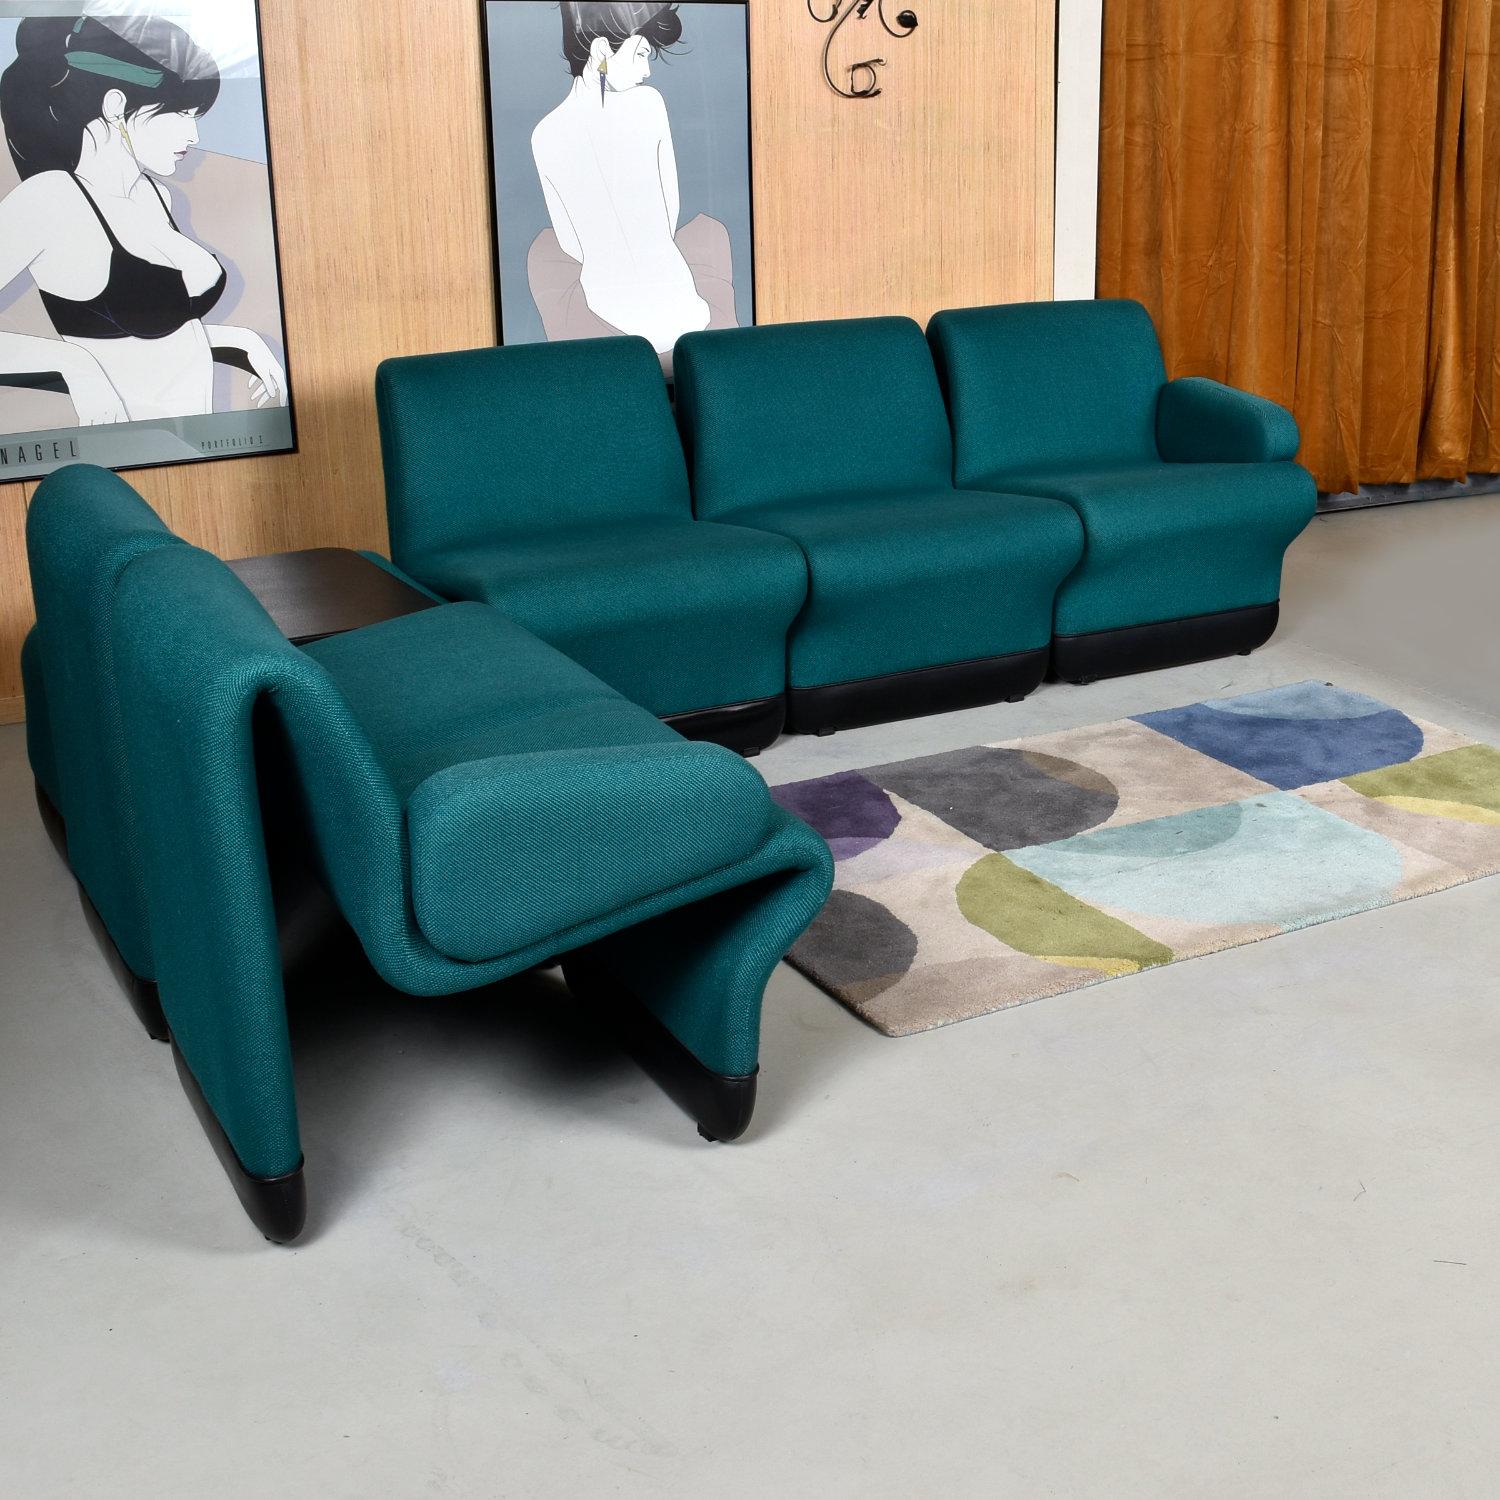 Late 20th Century Star Trek TNG Paul Boulva for Artopex Ten Forward Modular Sofa Lounge Chair Set For Sale